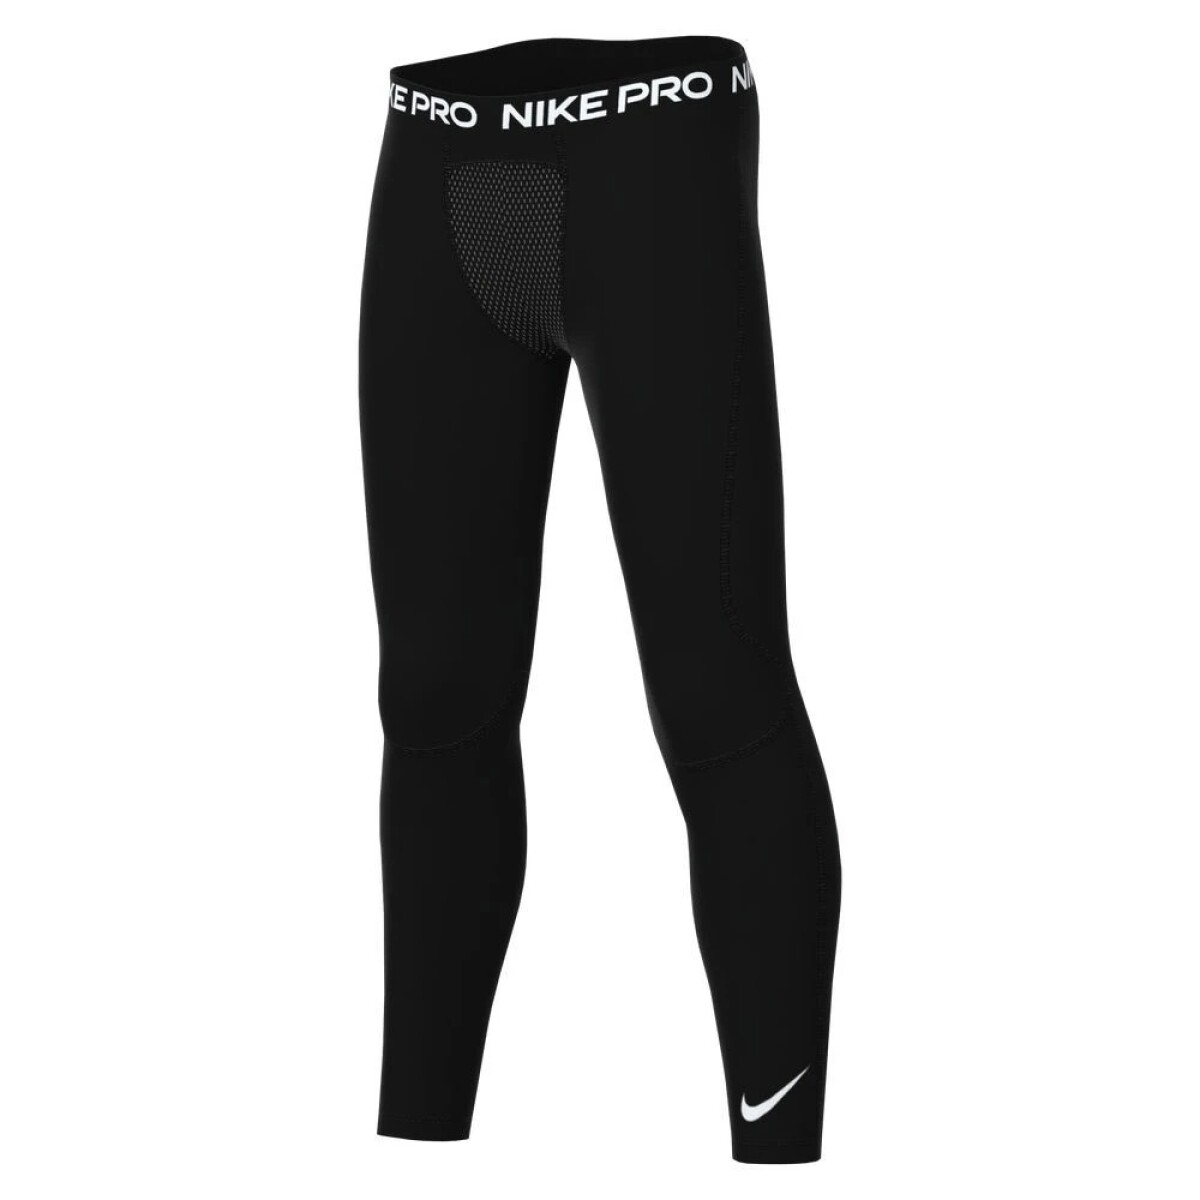 Calza Nike Entrenamiento Niño Np Df Tight Black - S/C 